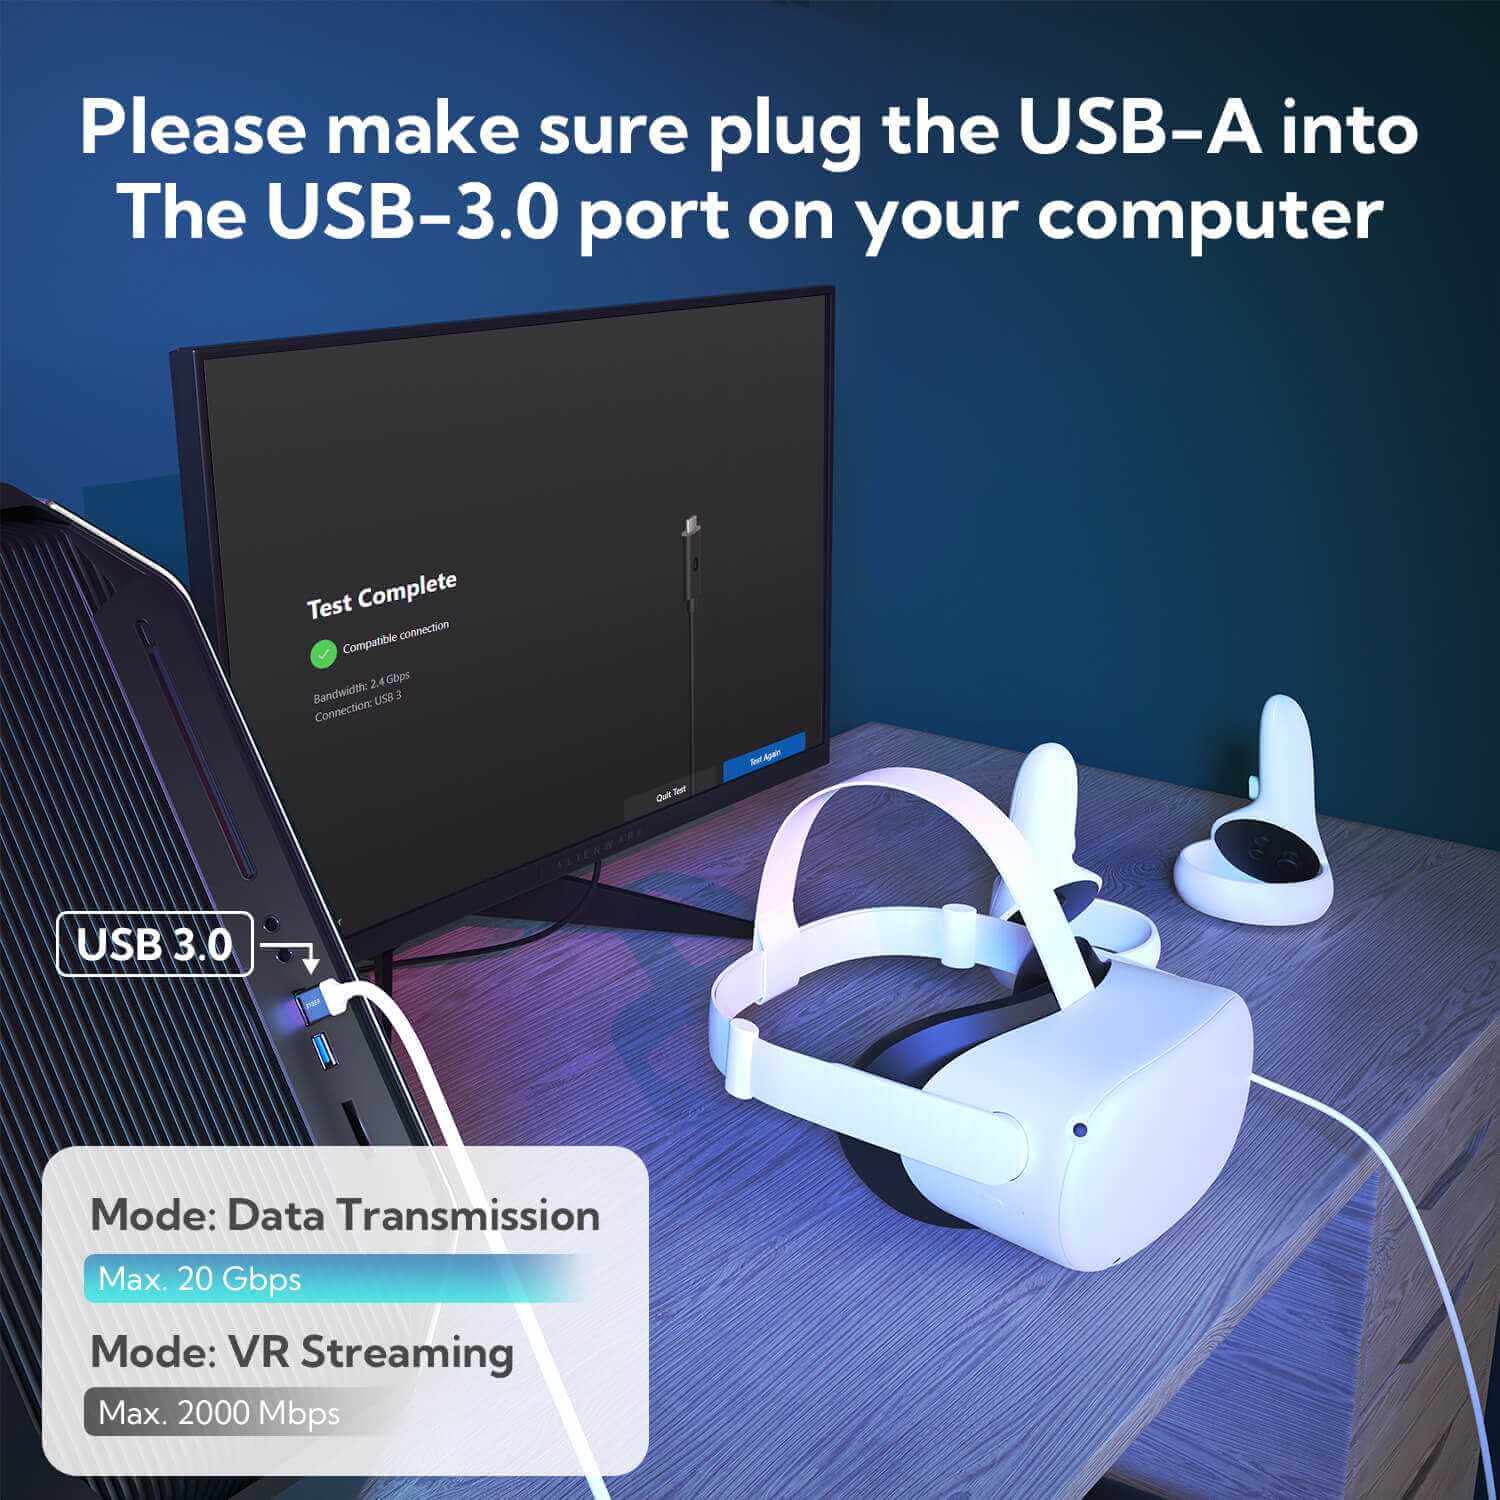 Cable de enlace ZyberVR USB-A a USB-C de 16 pies/5 m con indicador LED